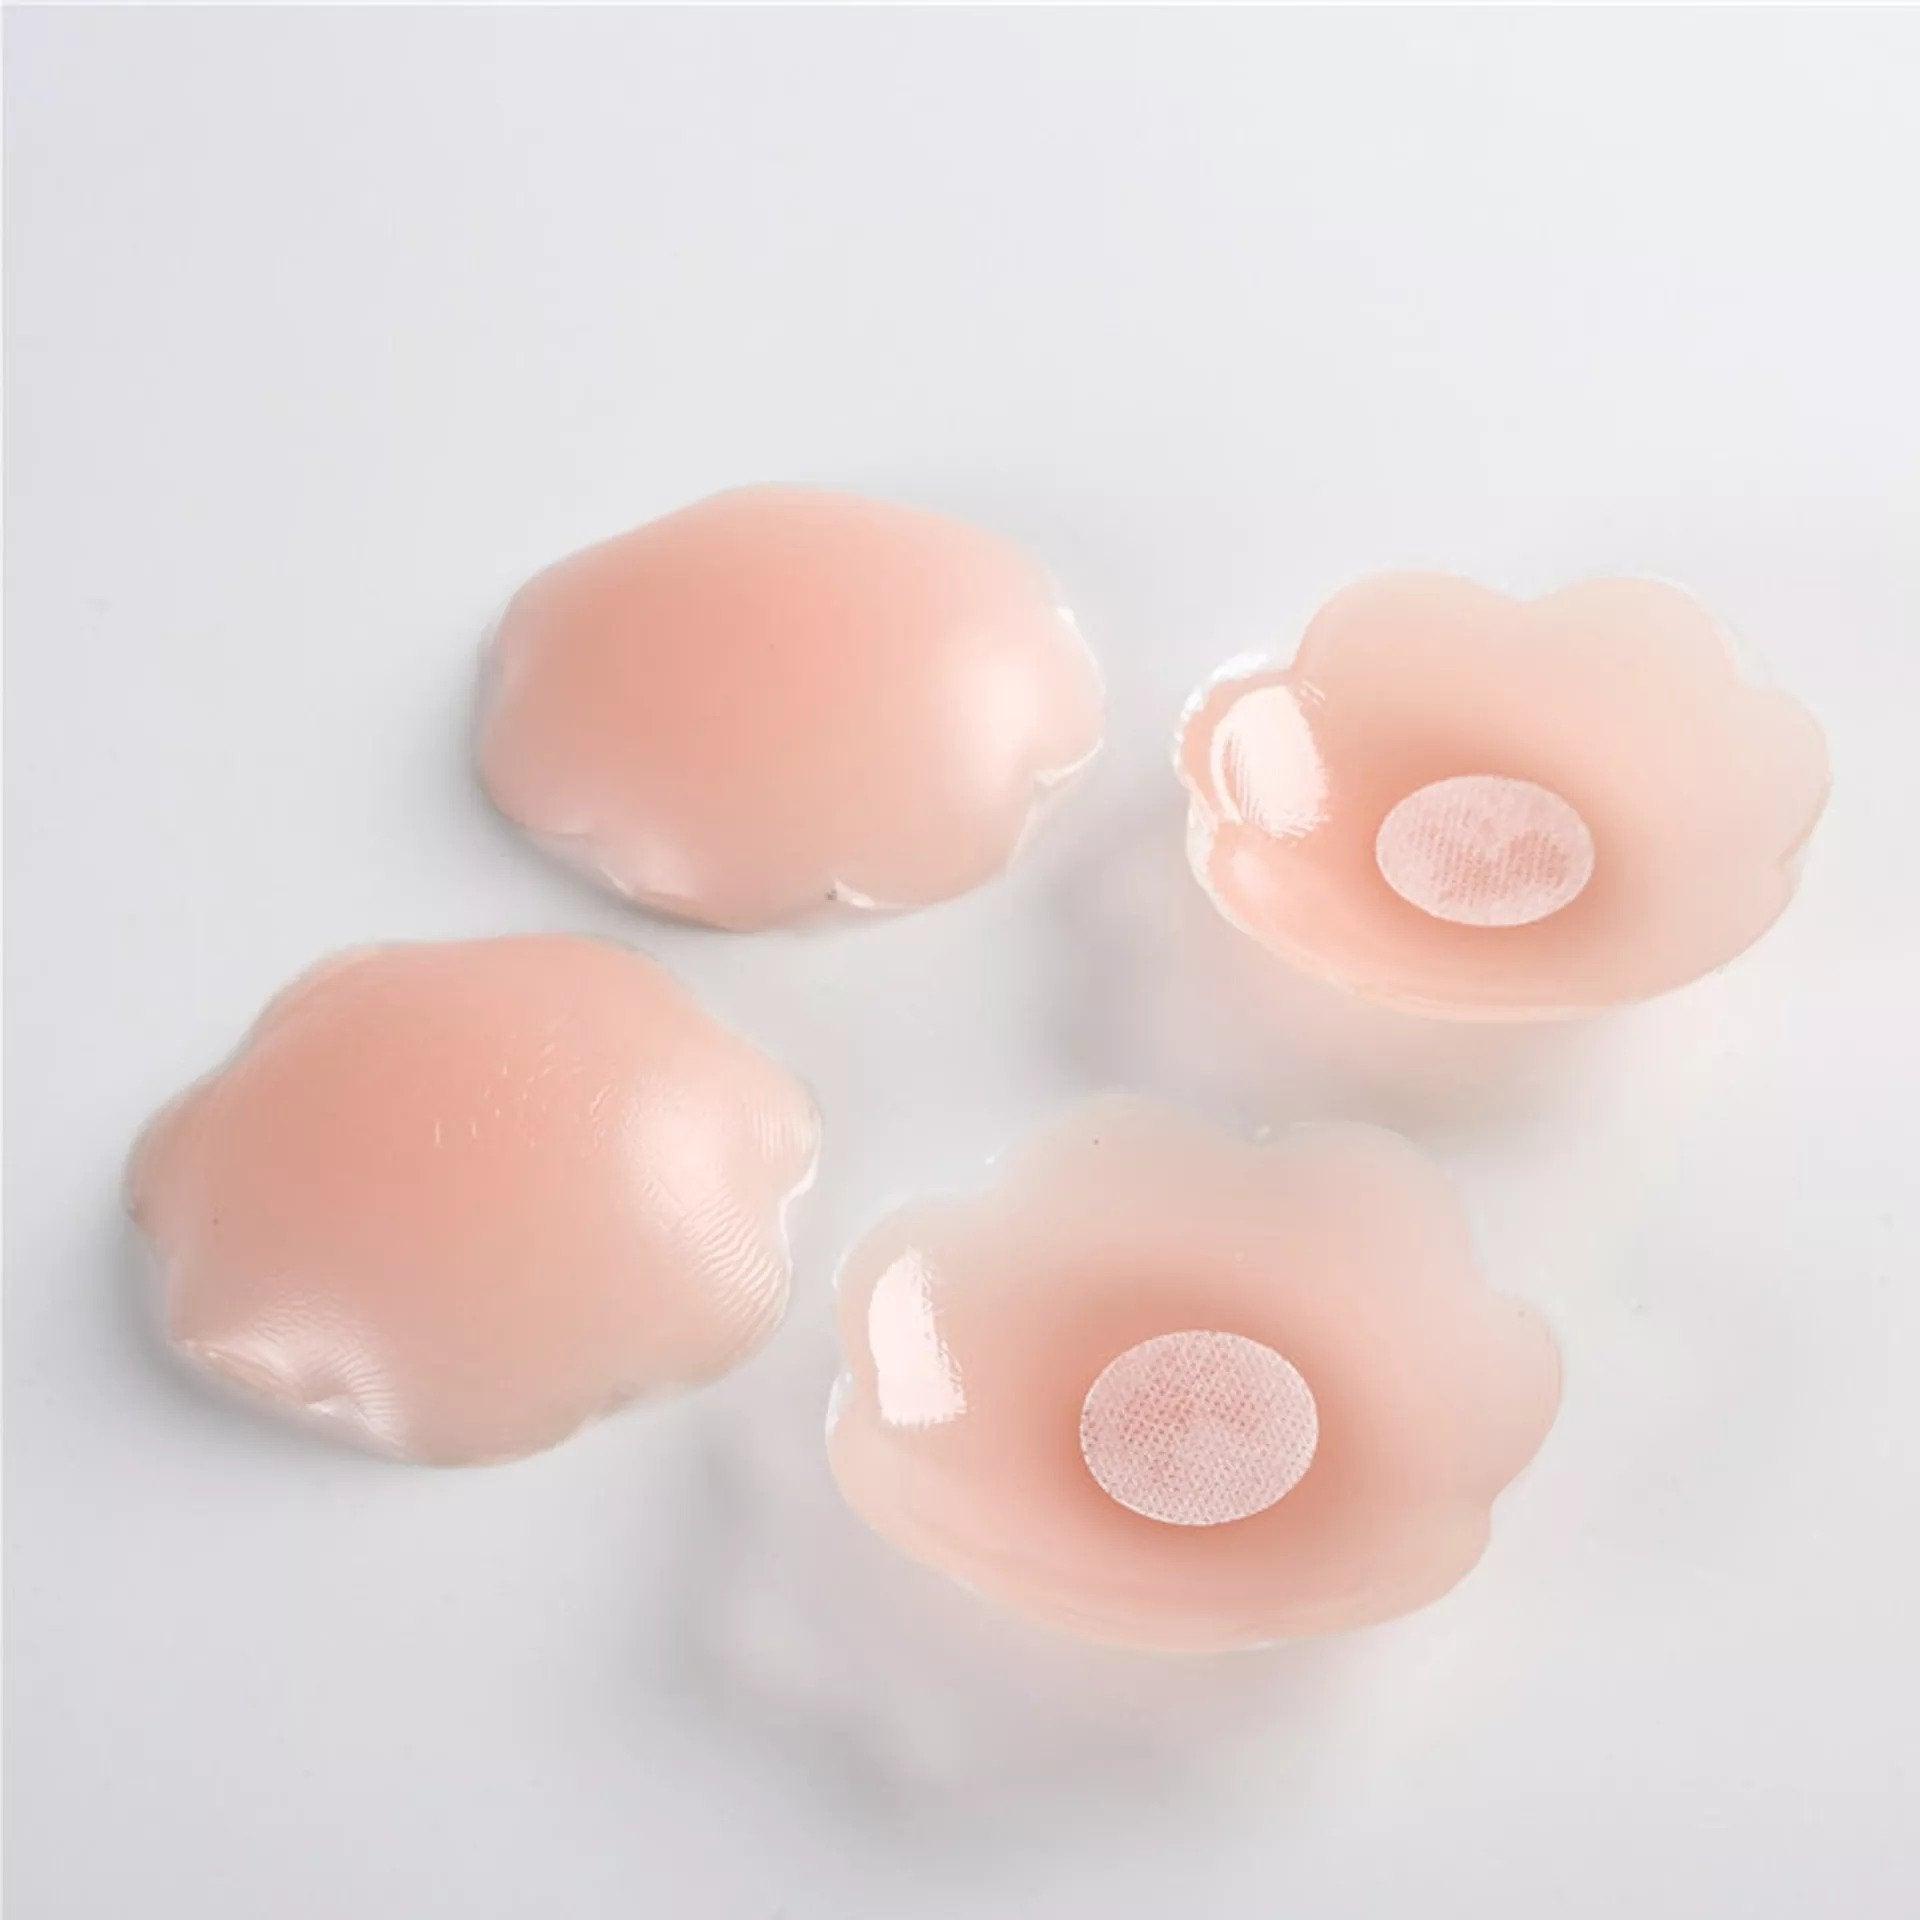 Medium adhesive silicone nipple covers